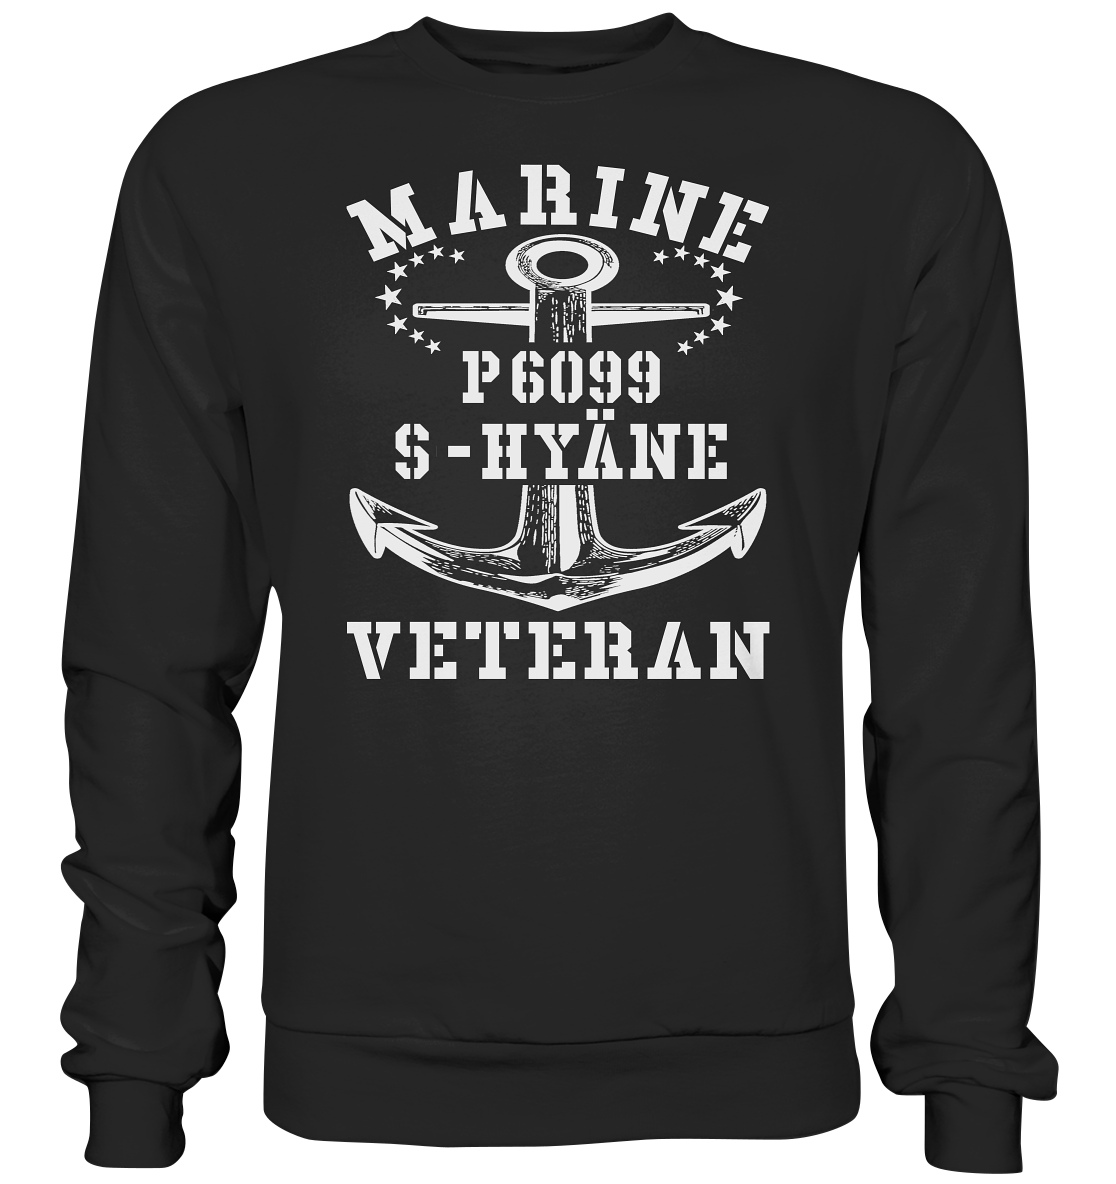 P6099 S-HYÄNE Marine Veteran - Premium Sweatshirt